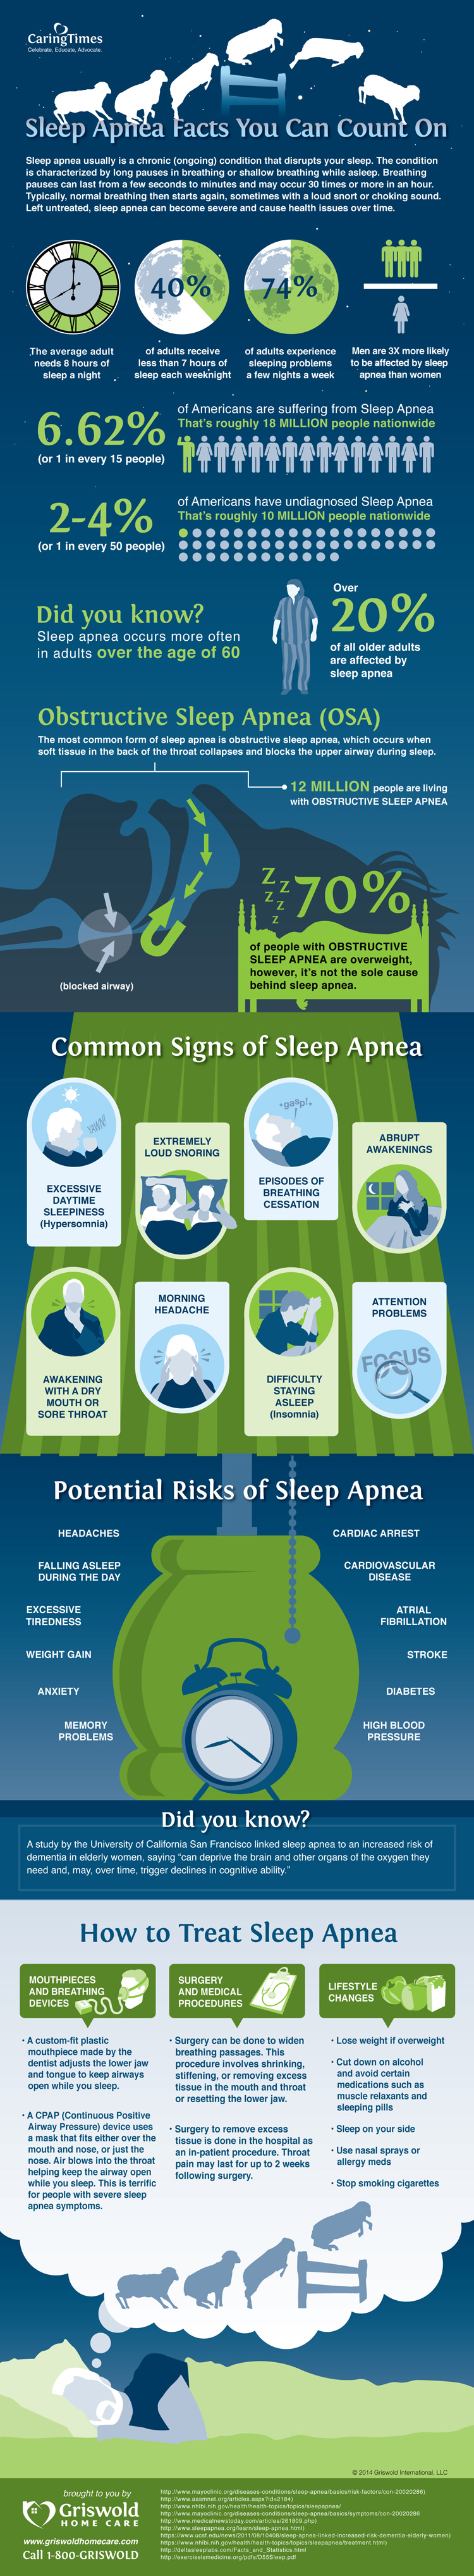 The Facts you need to understand Sleep Apnea